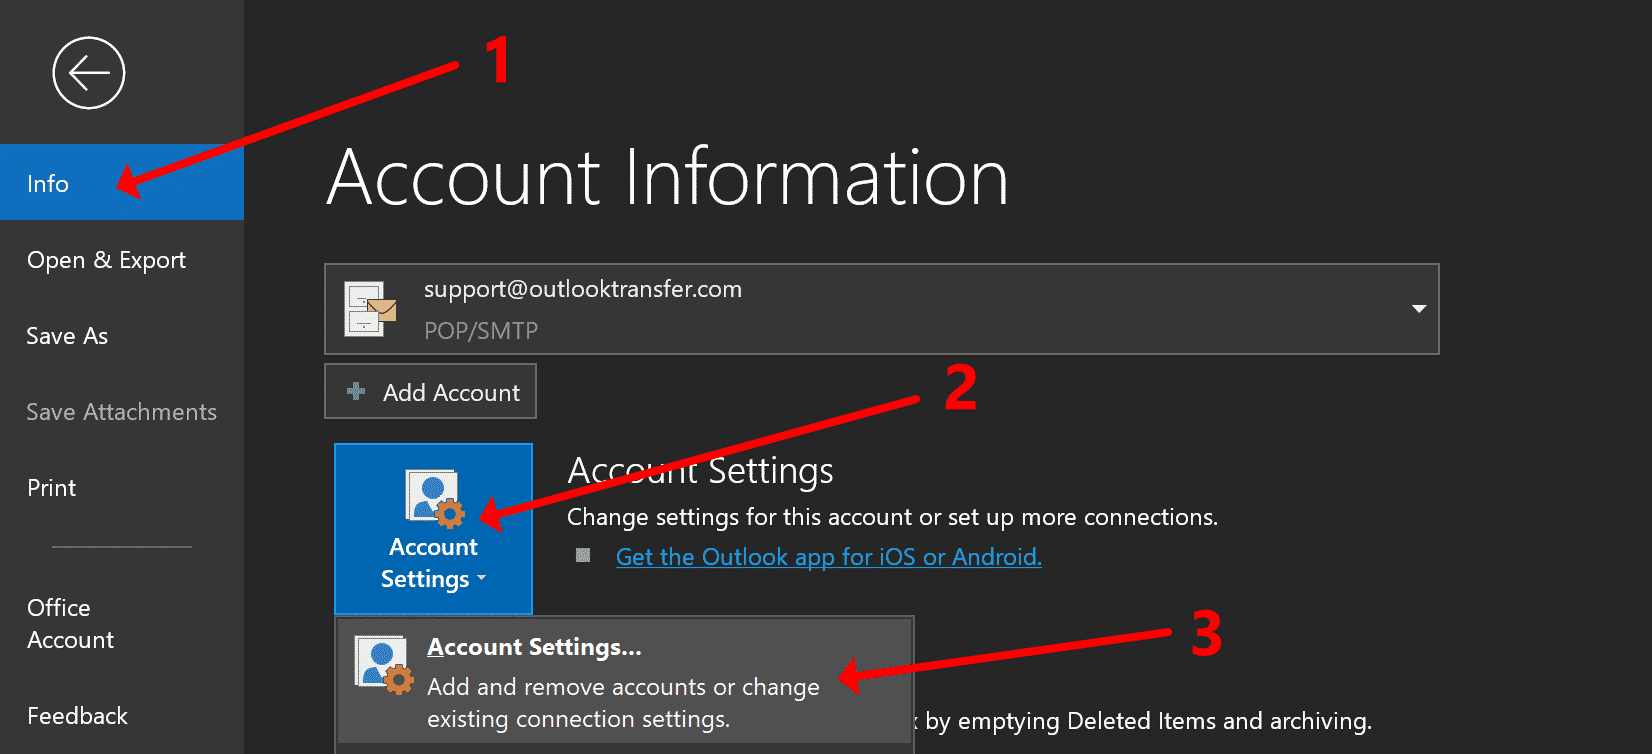 Outlook account settings menu